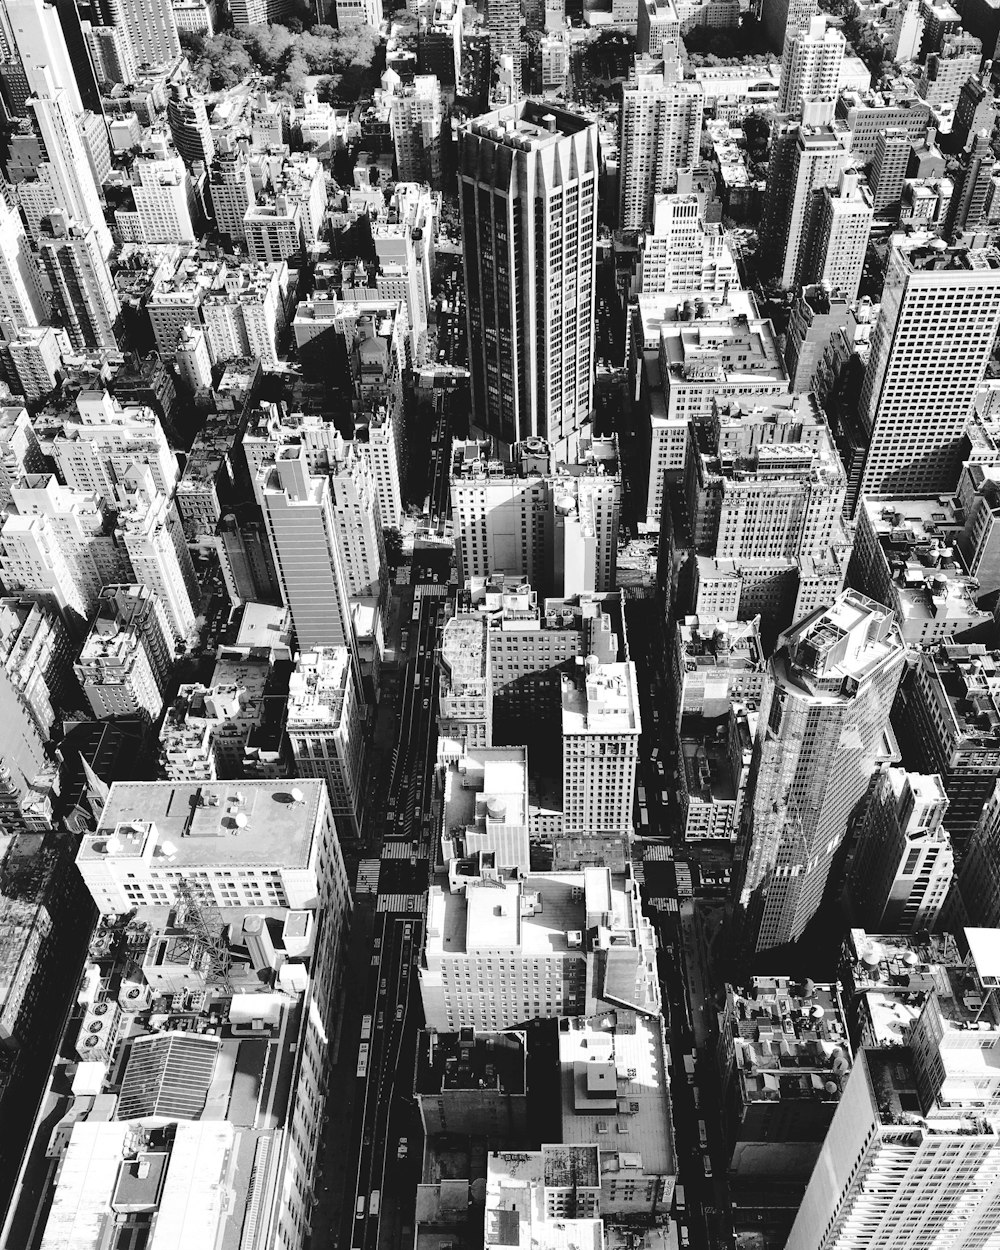 Fotografía aérea en escala de grises de edificios